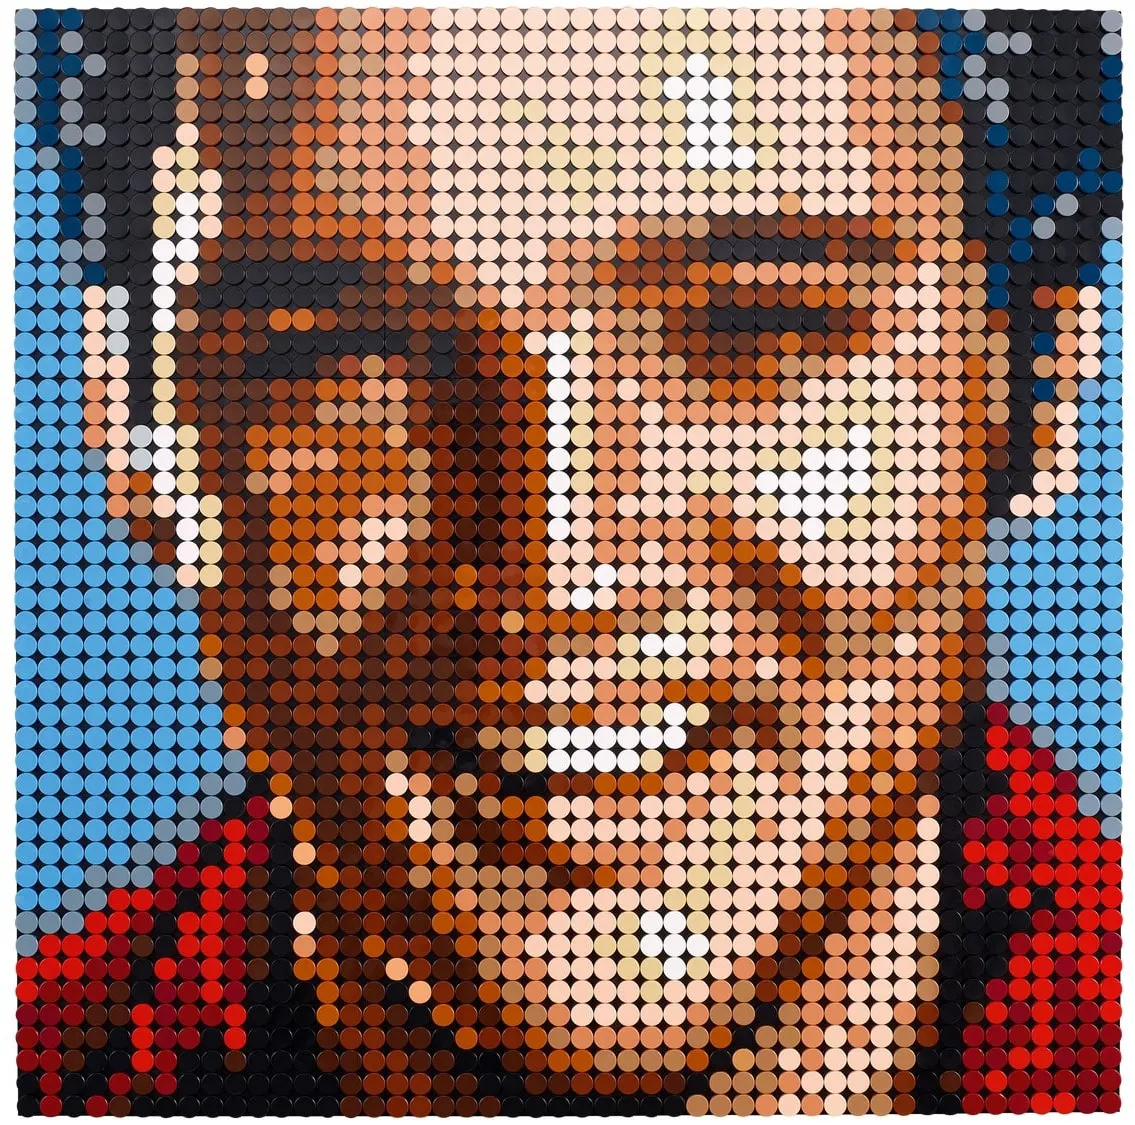 LEGO ART 31204 Elvis Presley New Sets for March 1st 2022 Revealed